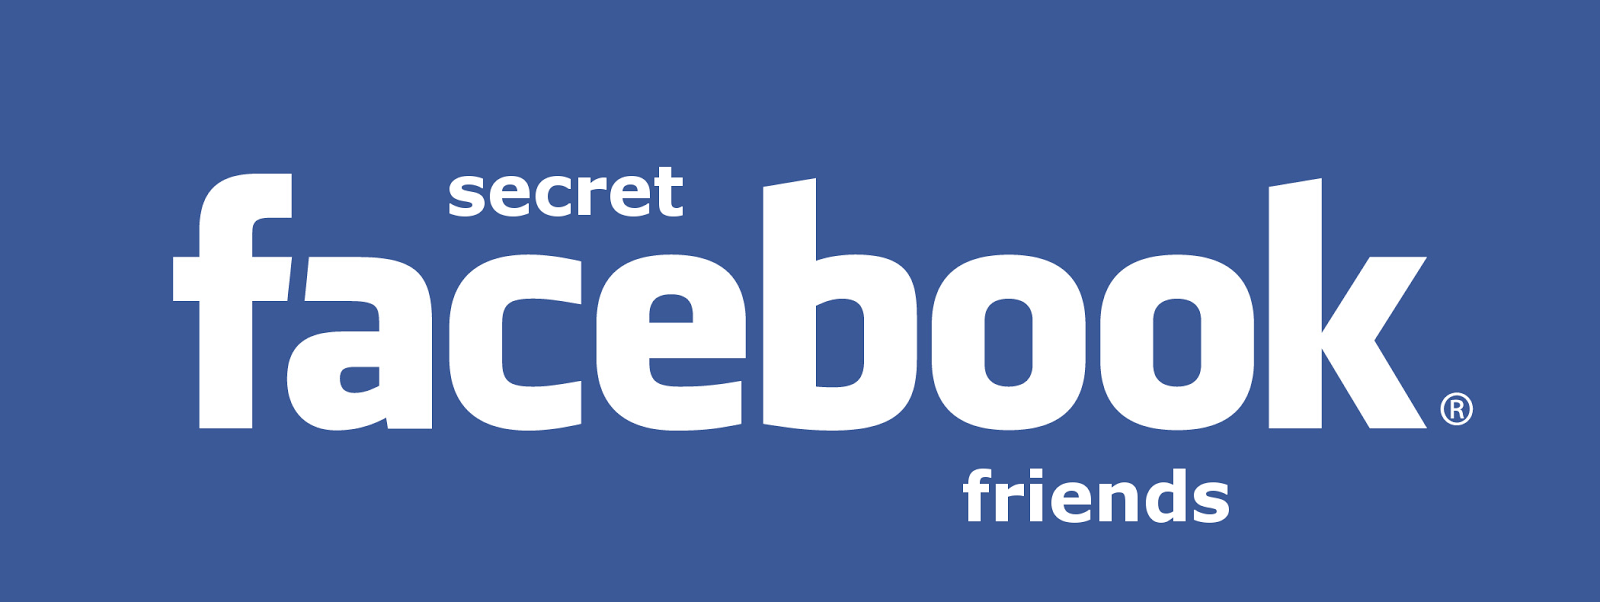 Facebook Friends Logo - Tip #3 How to: Have a secret friend in Facebook